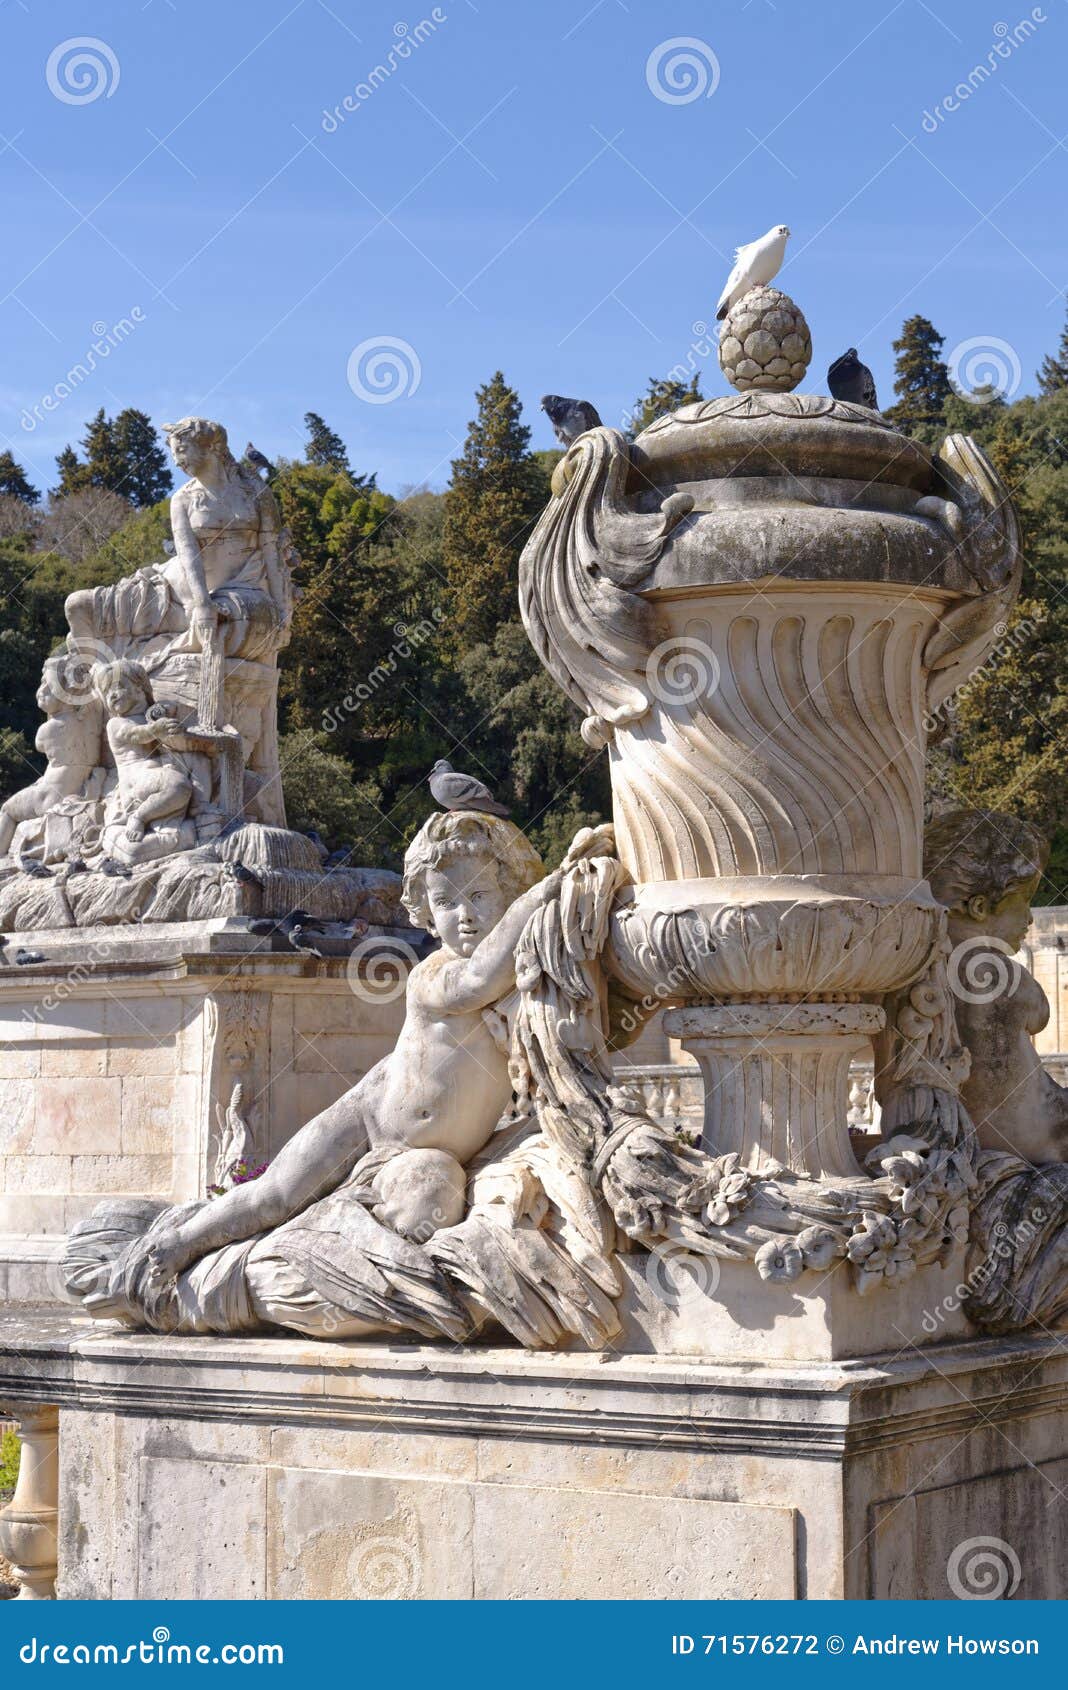 the fountain garden statues, nimes, france